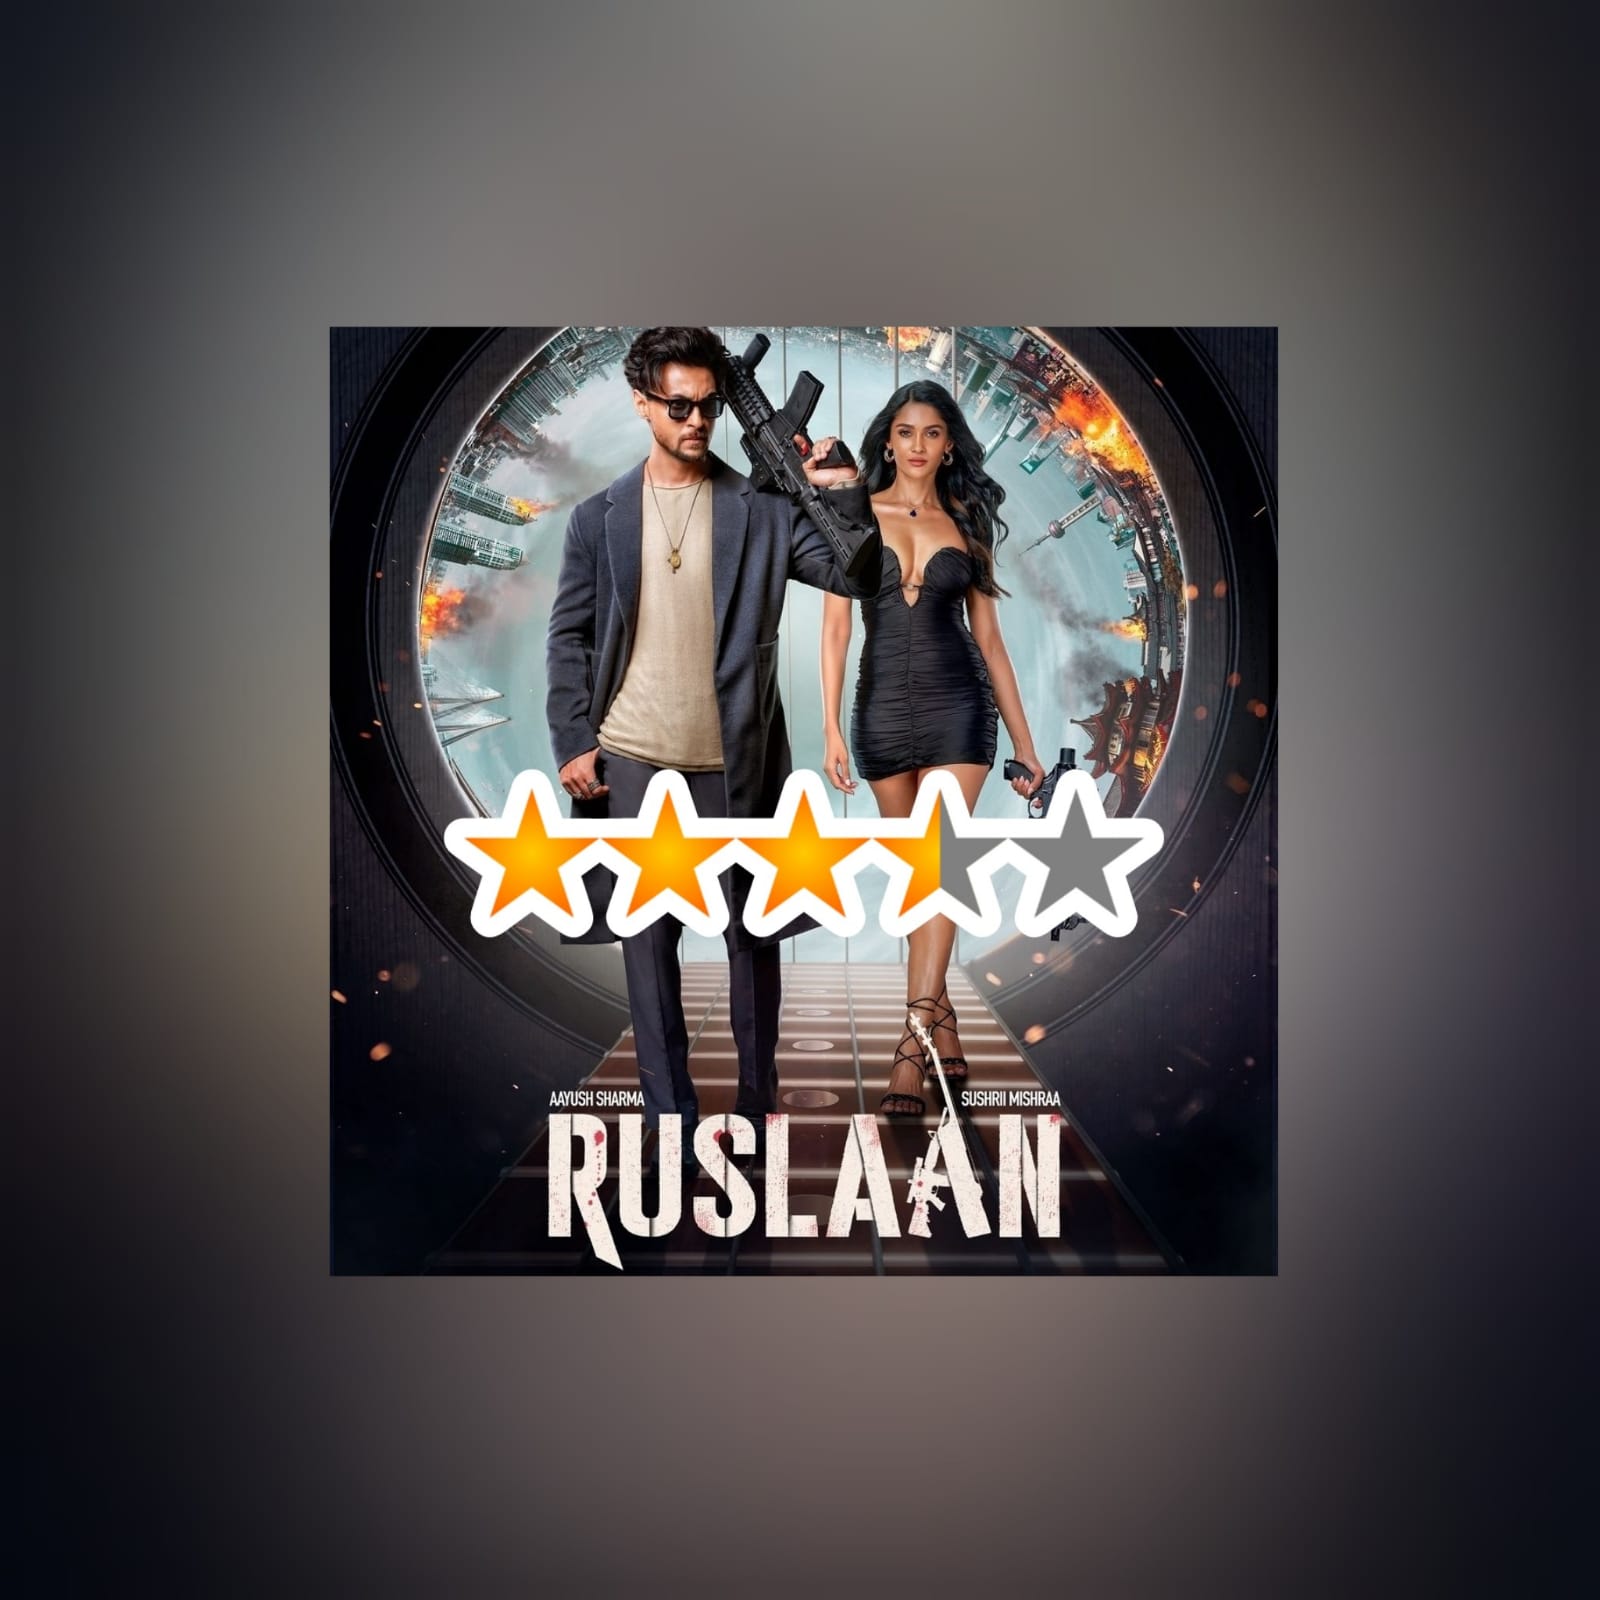 Ruslaan Movie Review | Starring Aayush Sharma